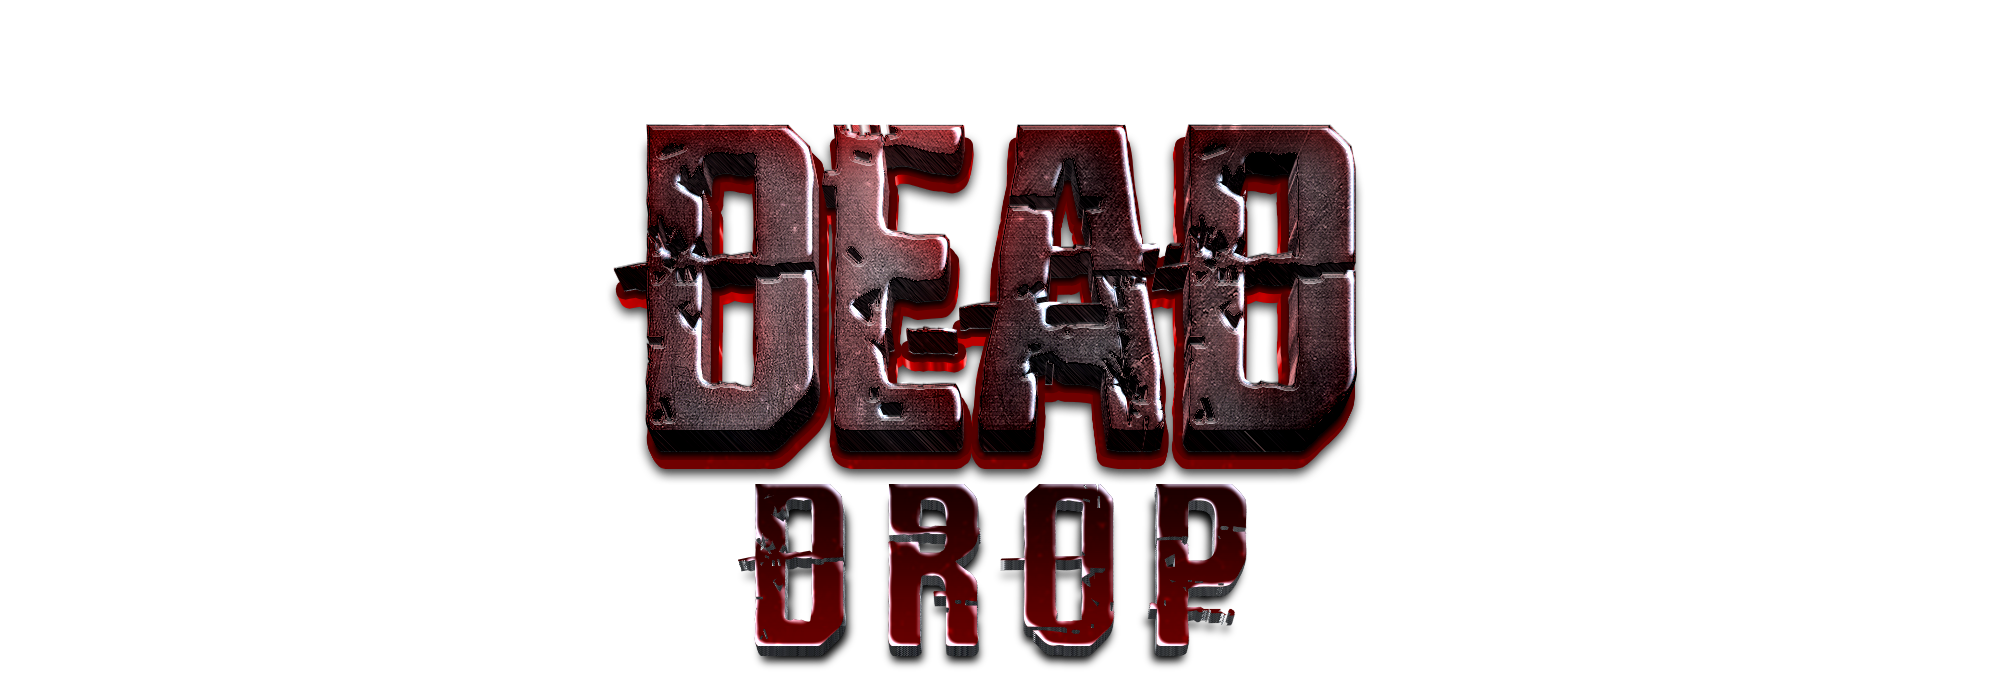 DEAD DROP